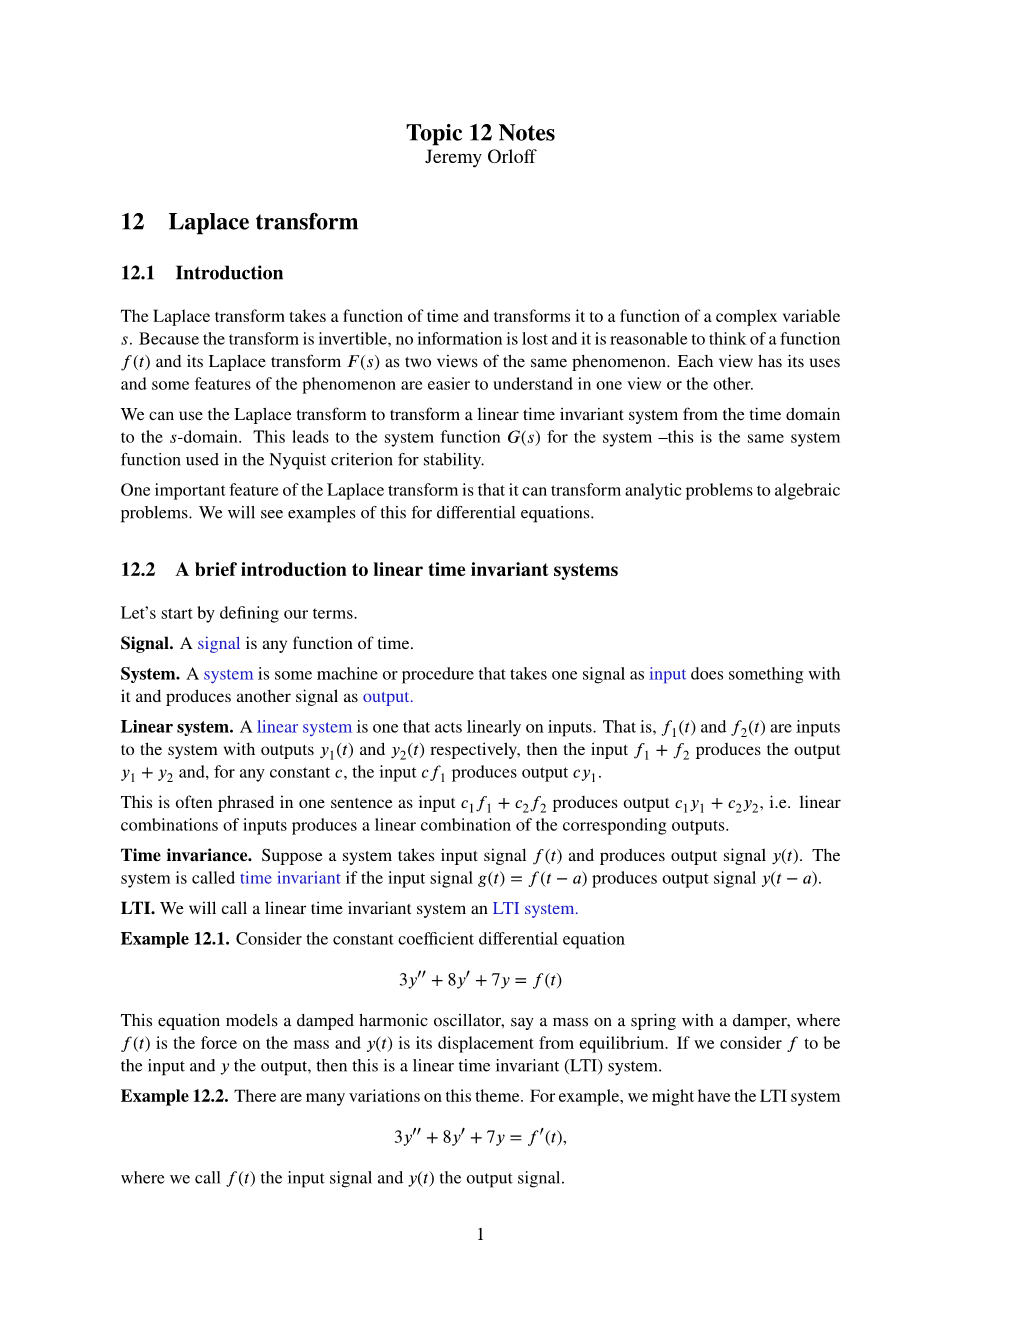 18.04 S18 Topic 12: Laplace Transform